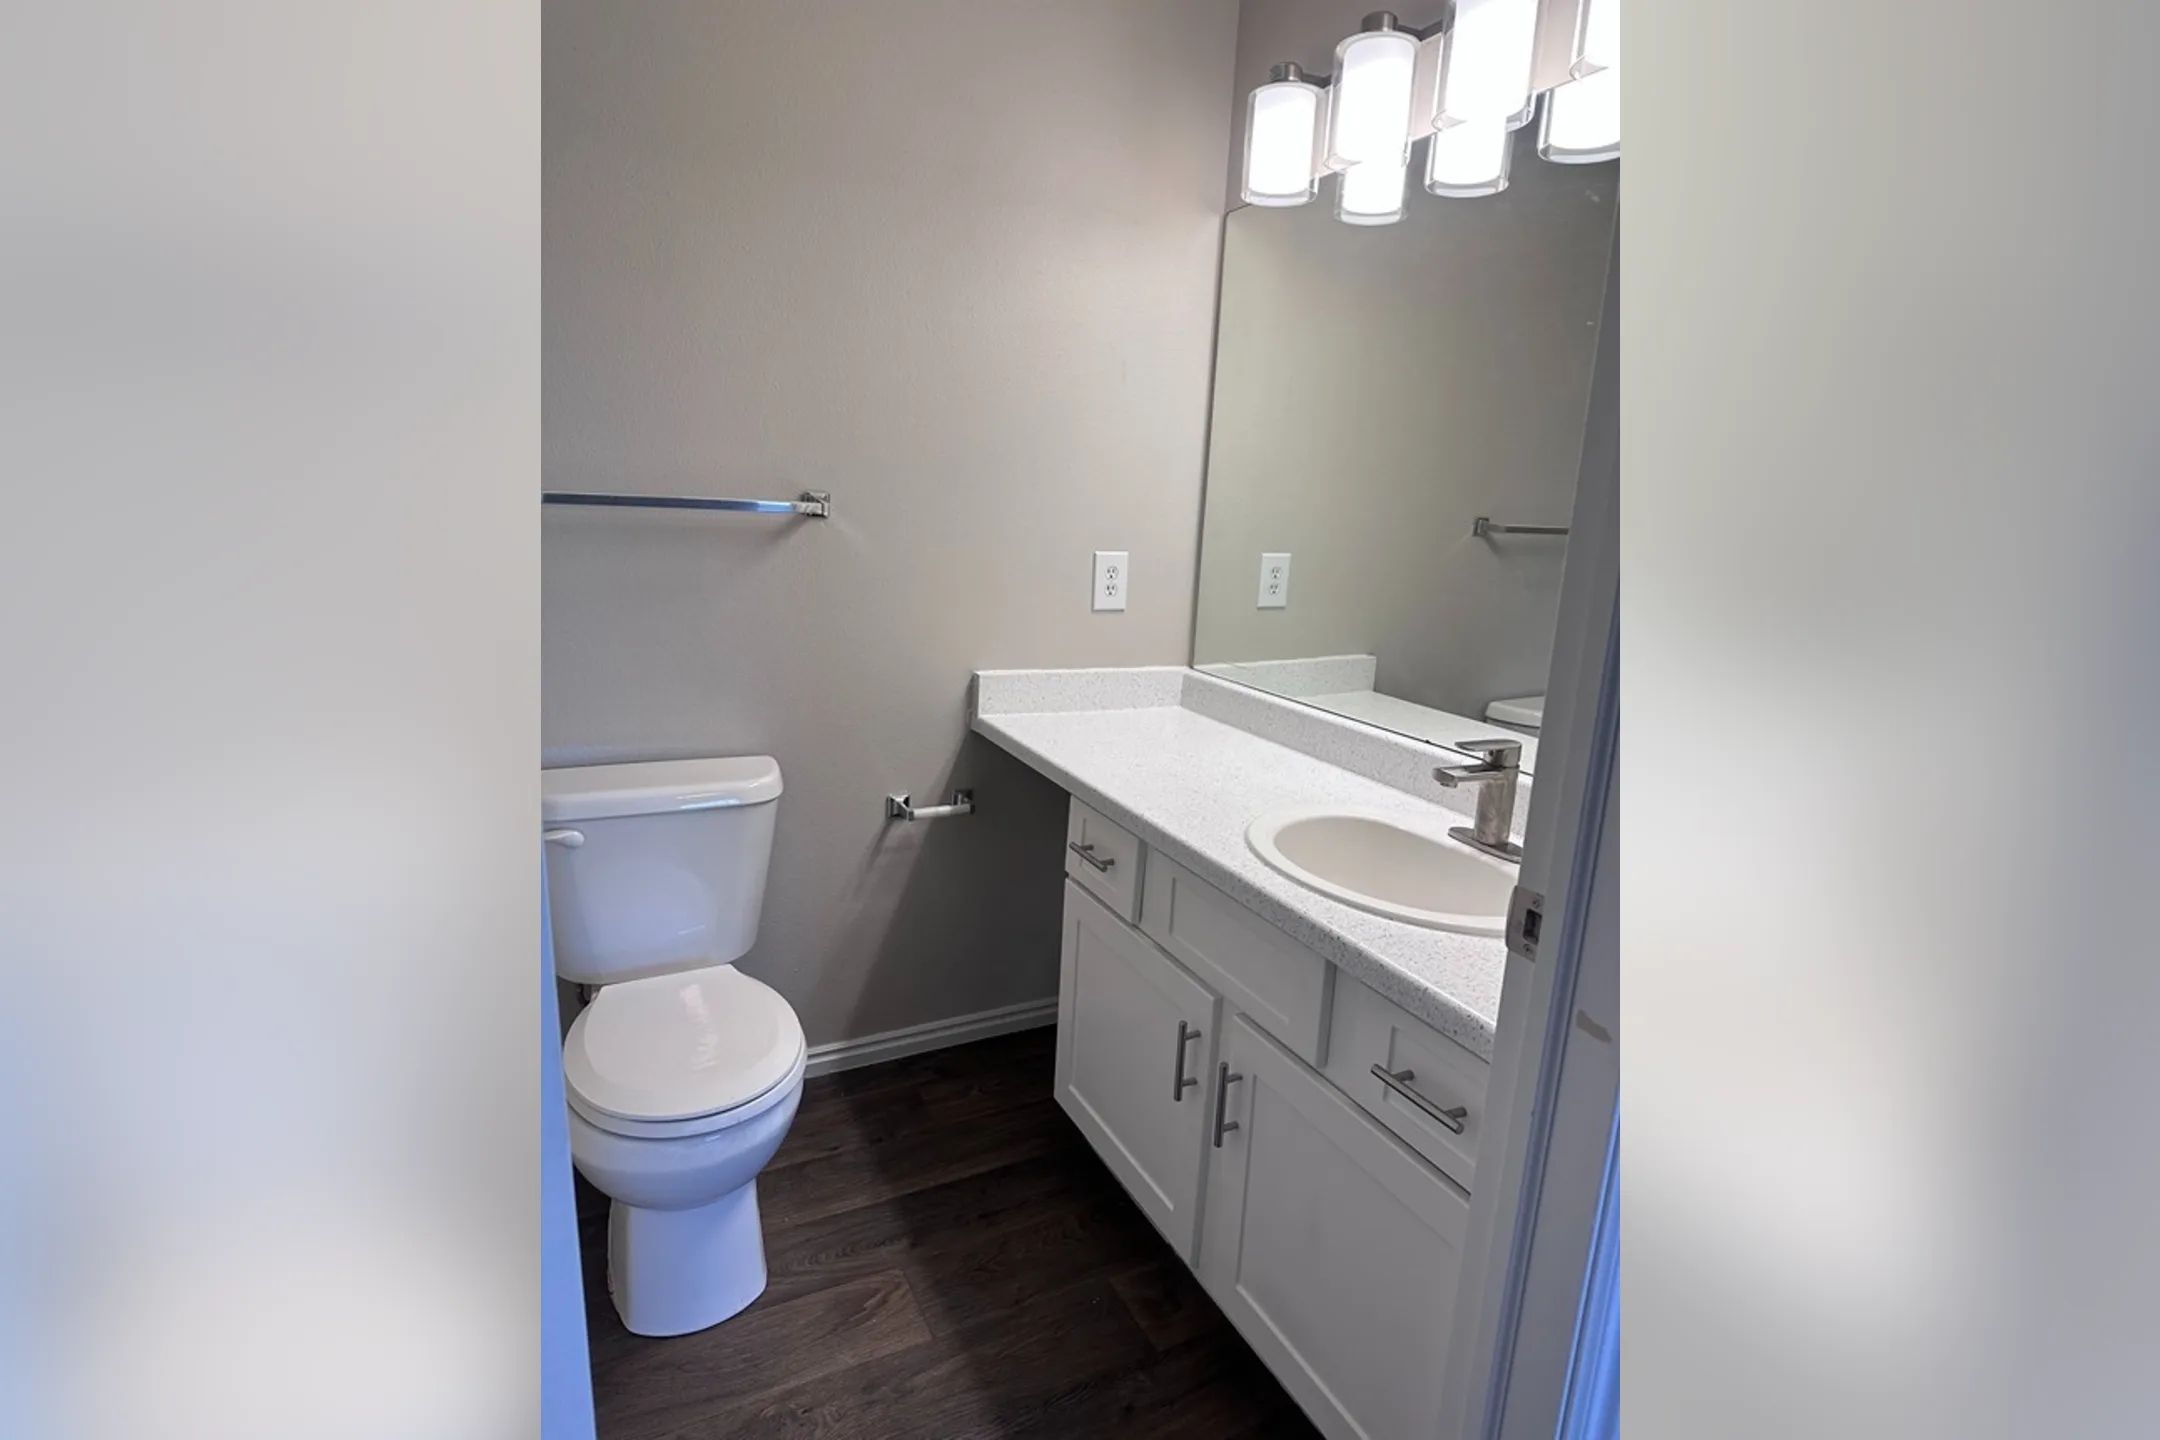 Bathroom - Haven Pointe Apartments - Ogden, UT